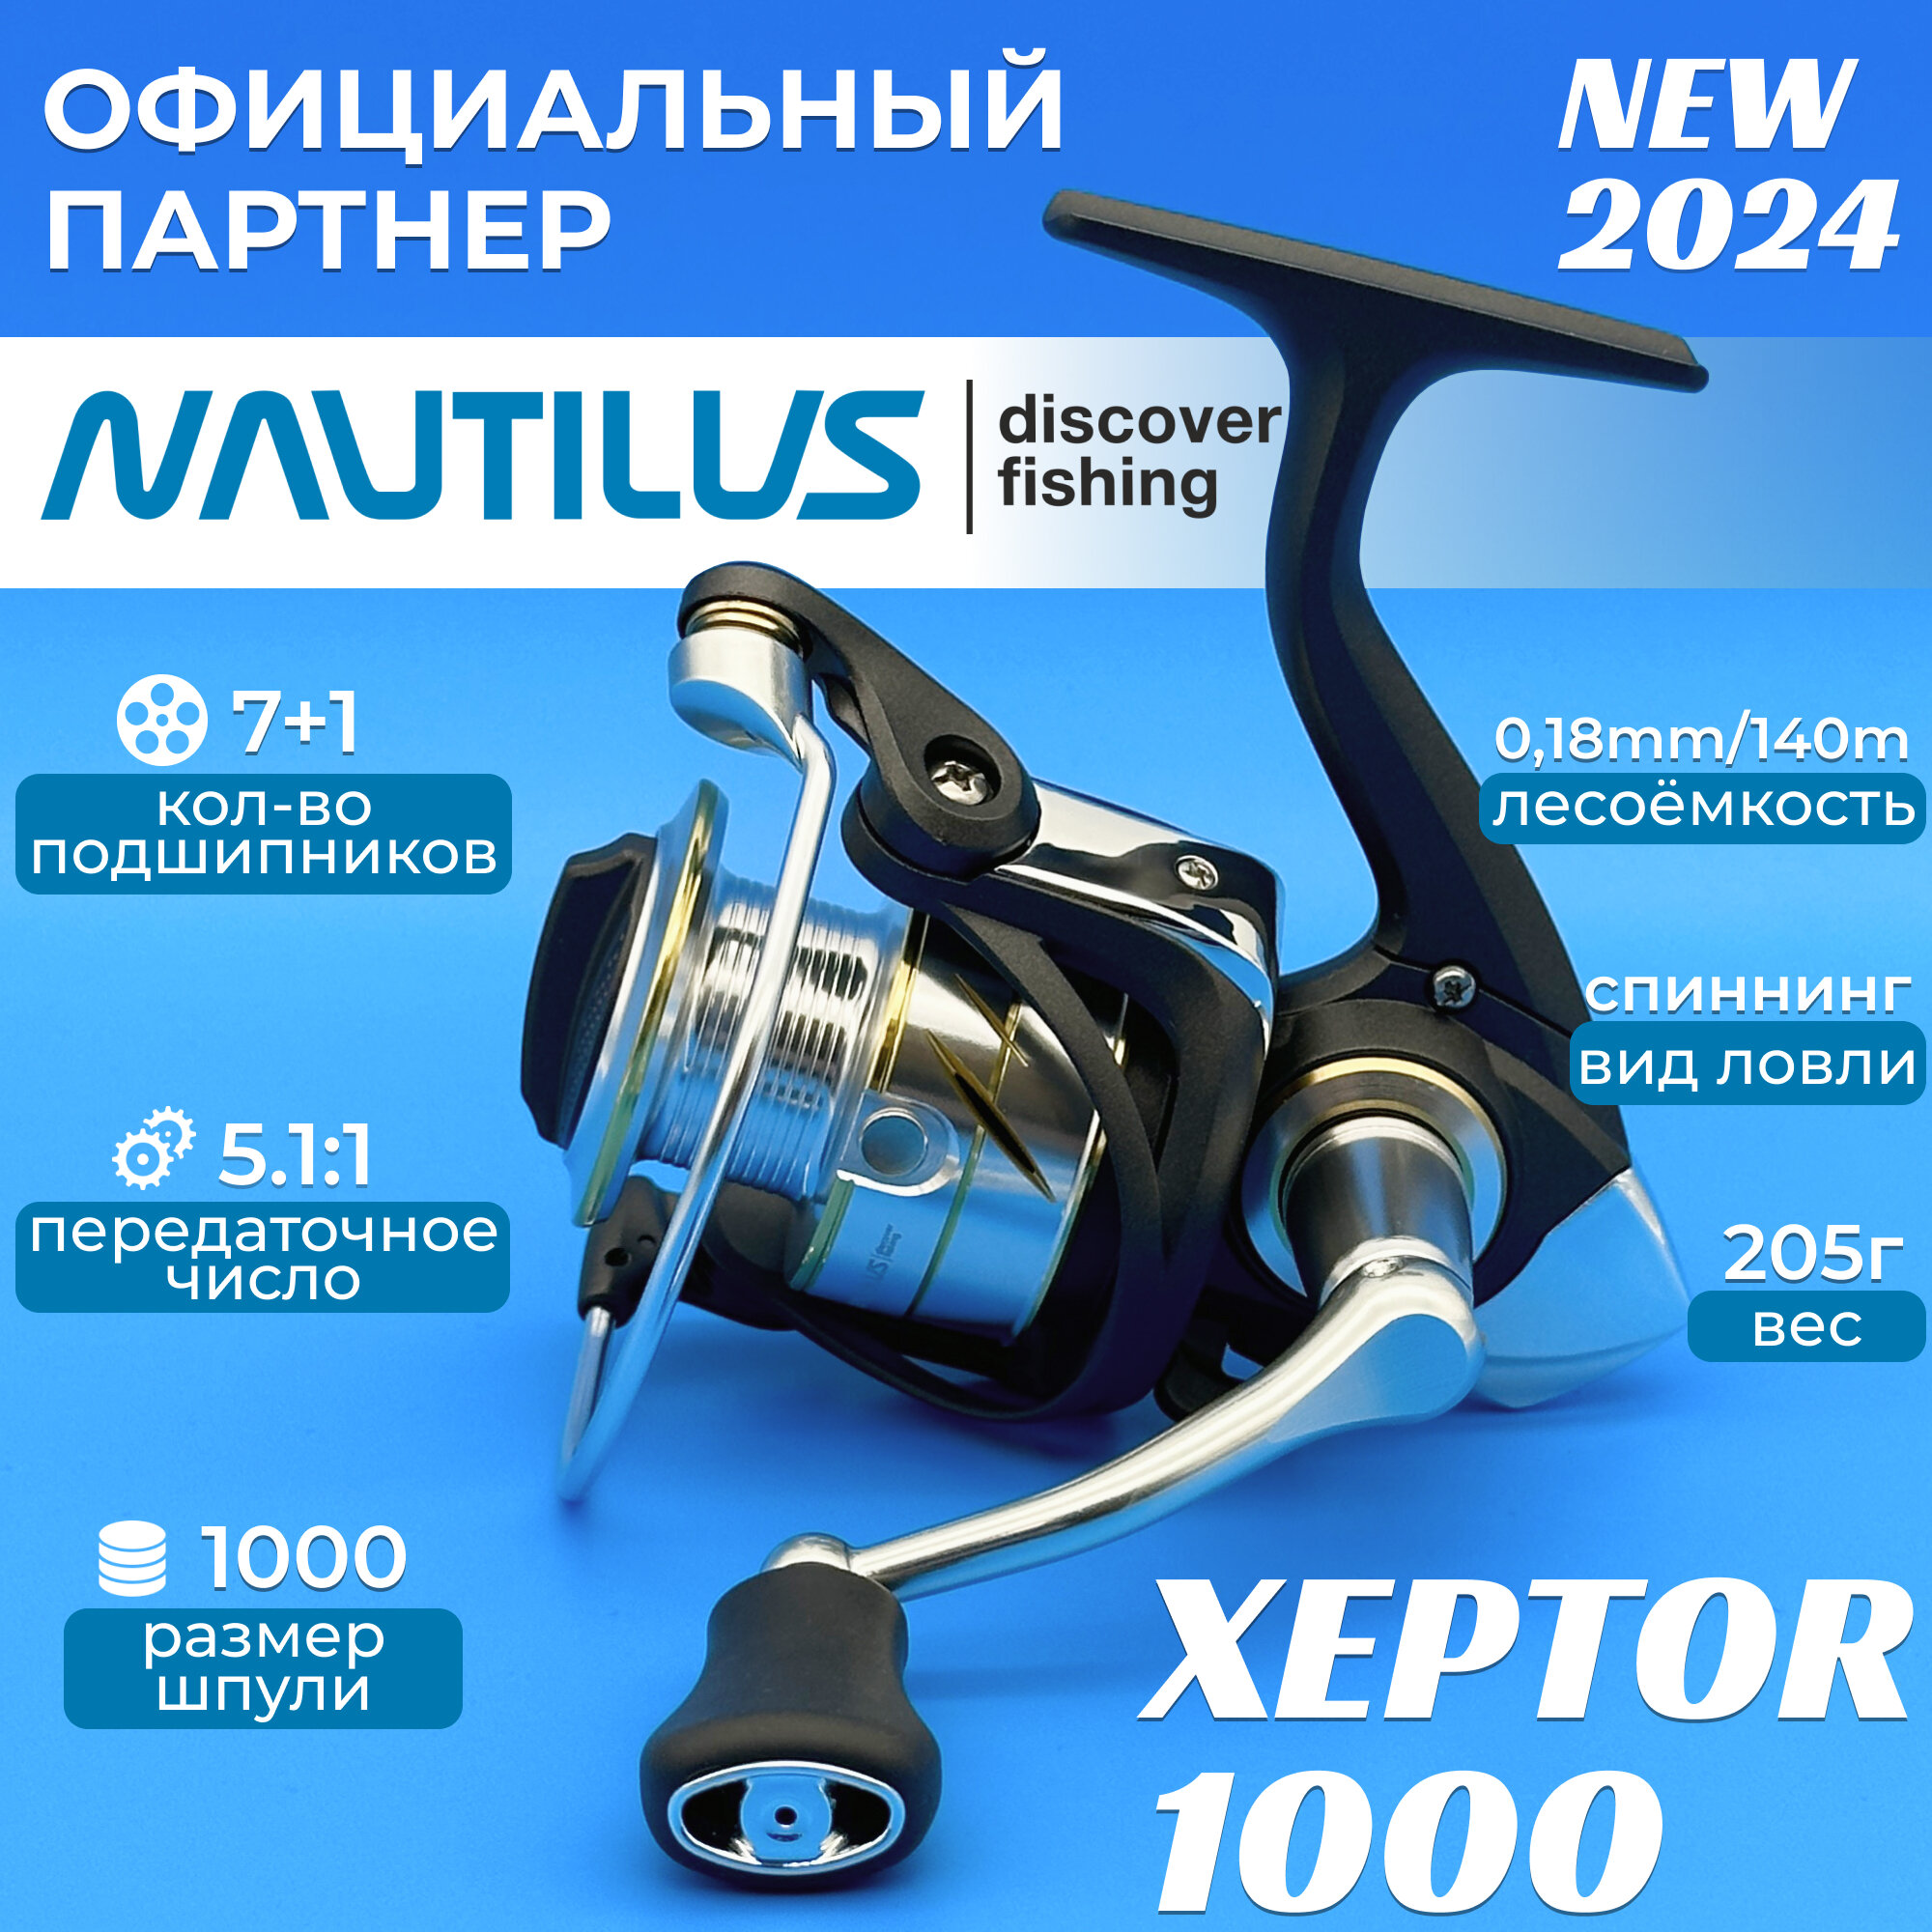 Катушка спиннинговая Nautilus Xeptor 1000